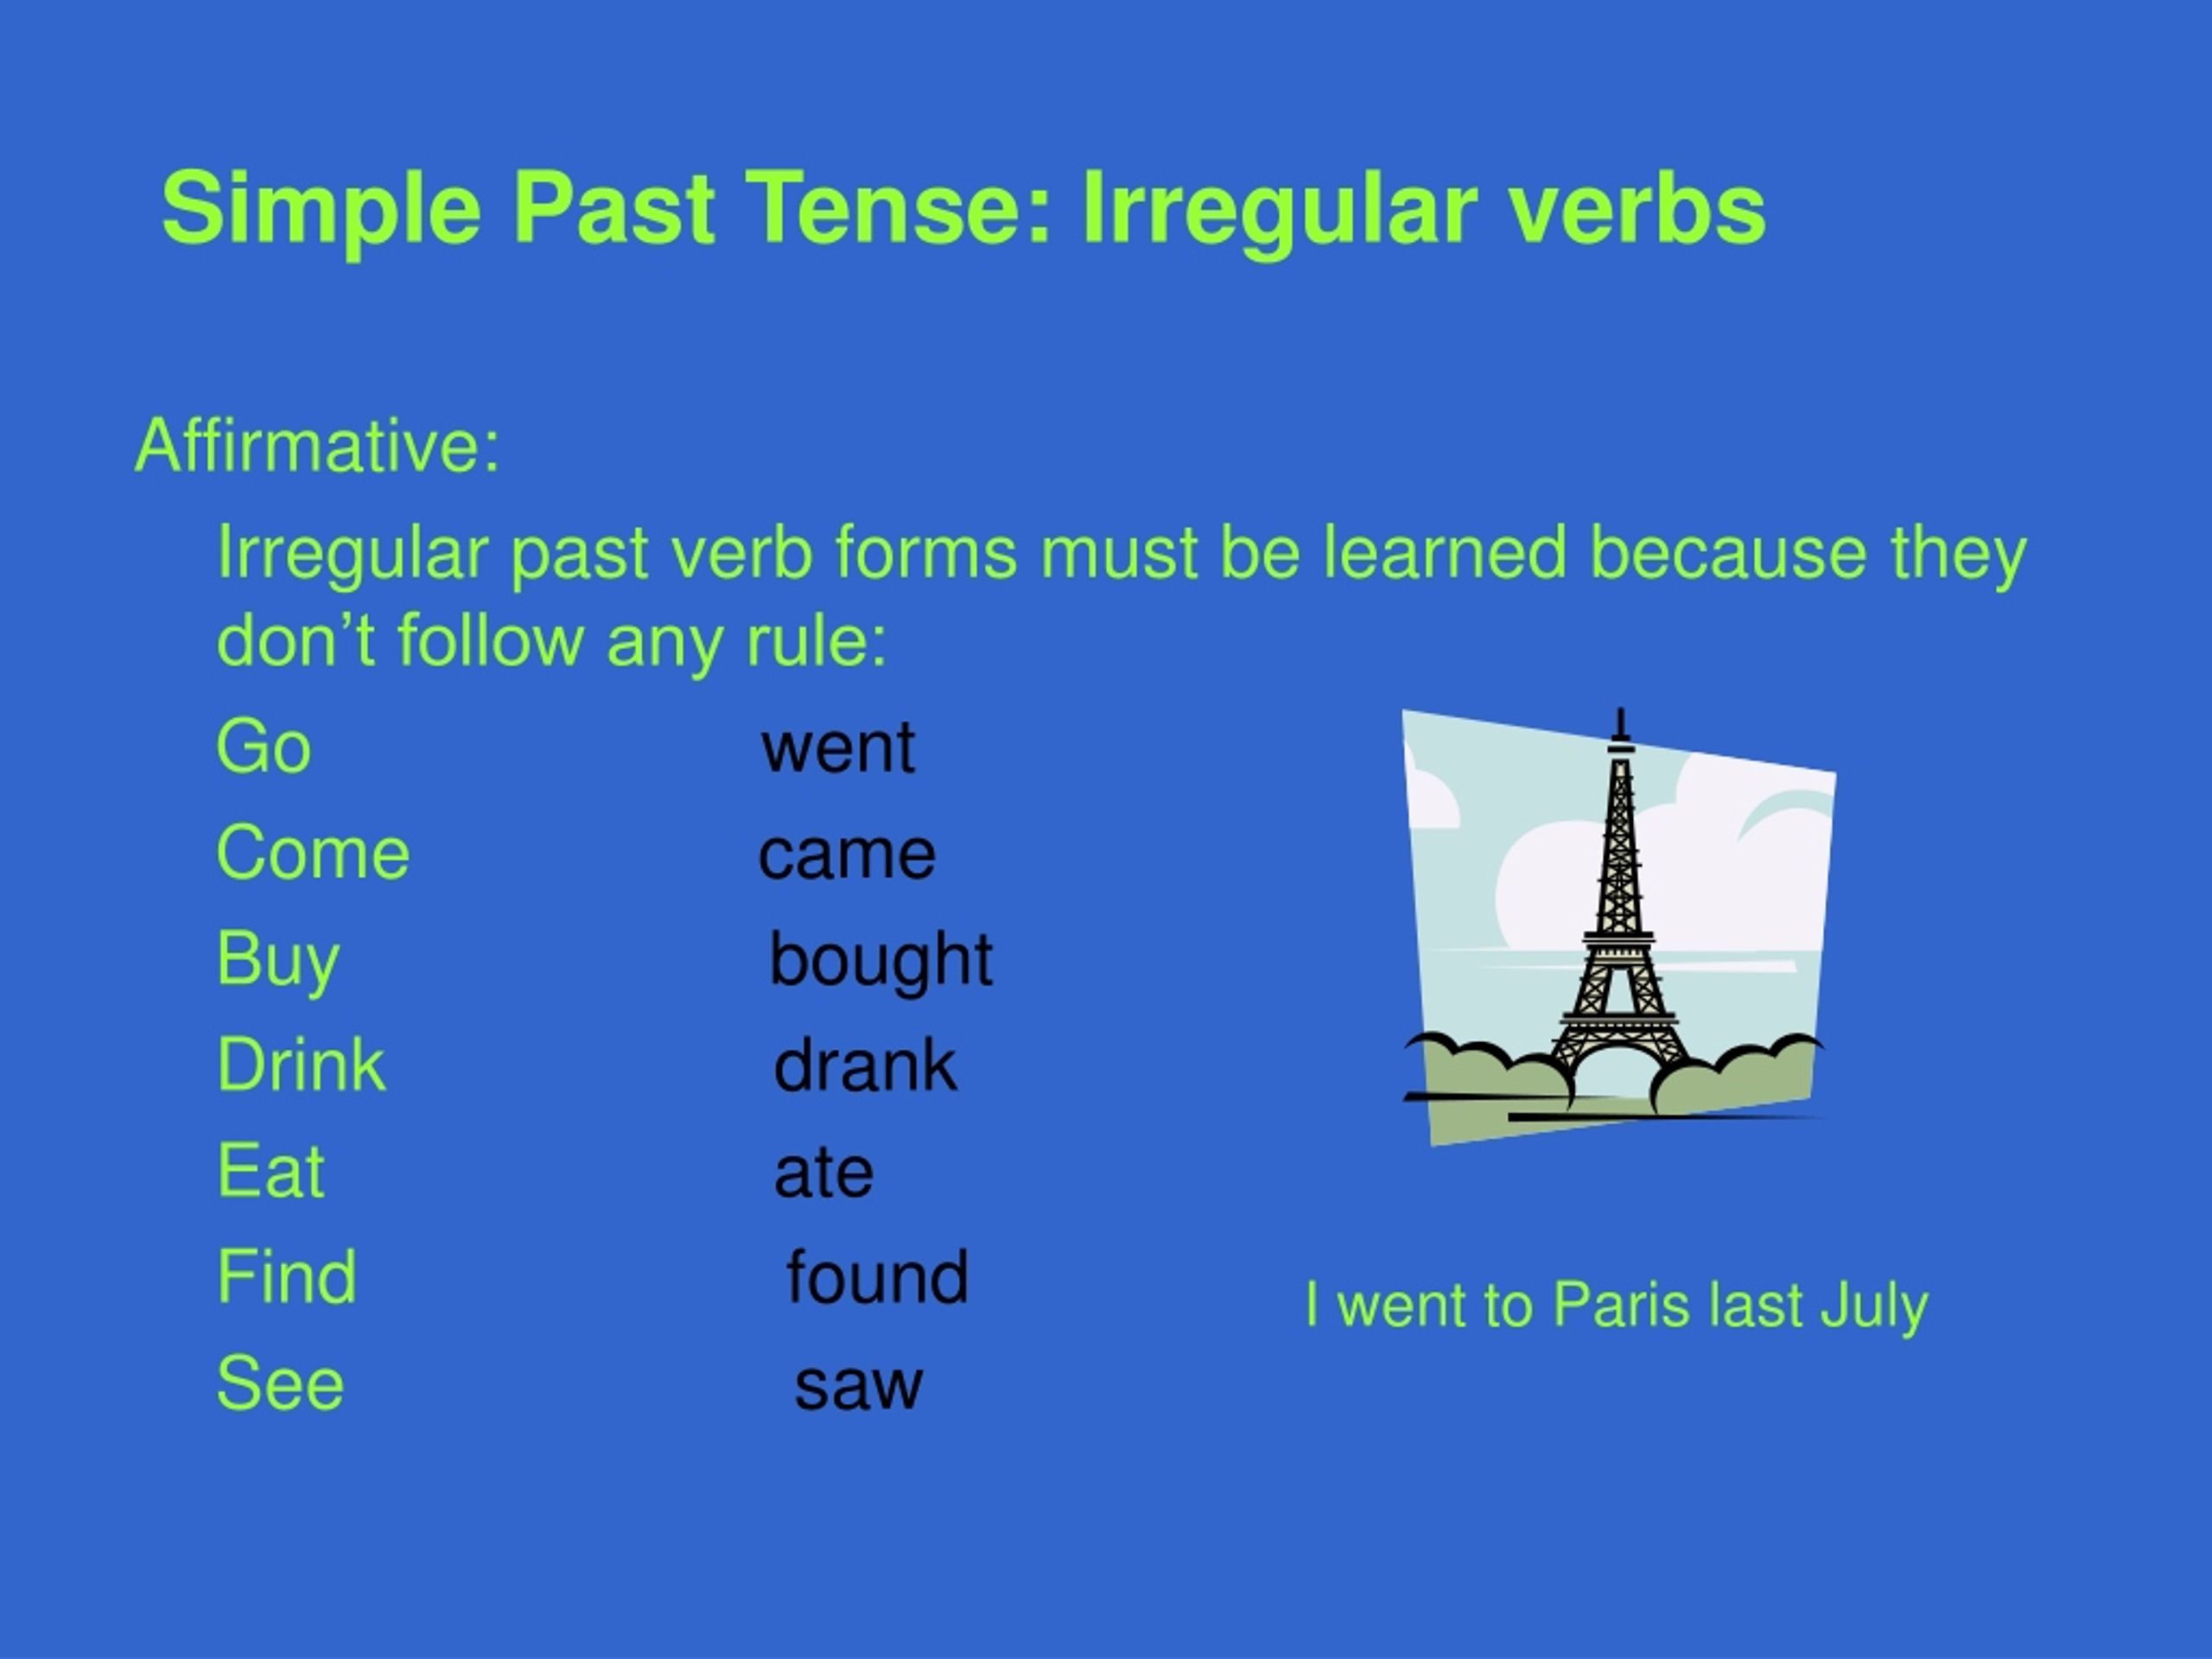 Irregular past tenses. Past simple Irregular verbs правило. Паст Симпл Irregular. Past Tense Irregular verbs. Irregular past Tense.